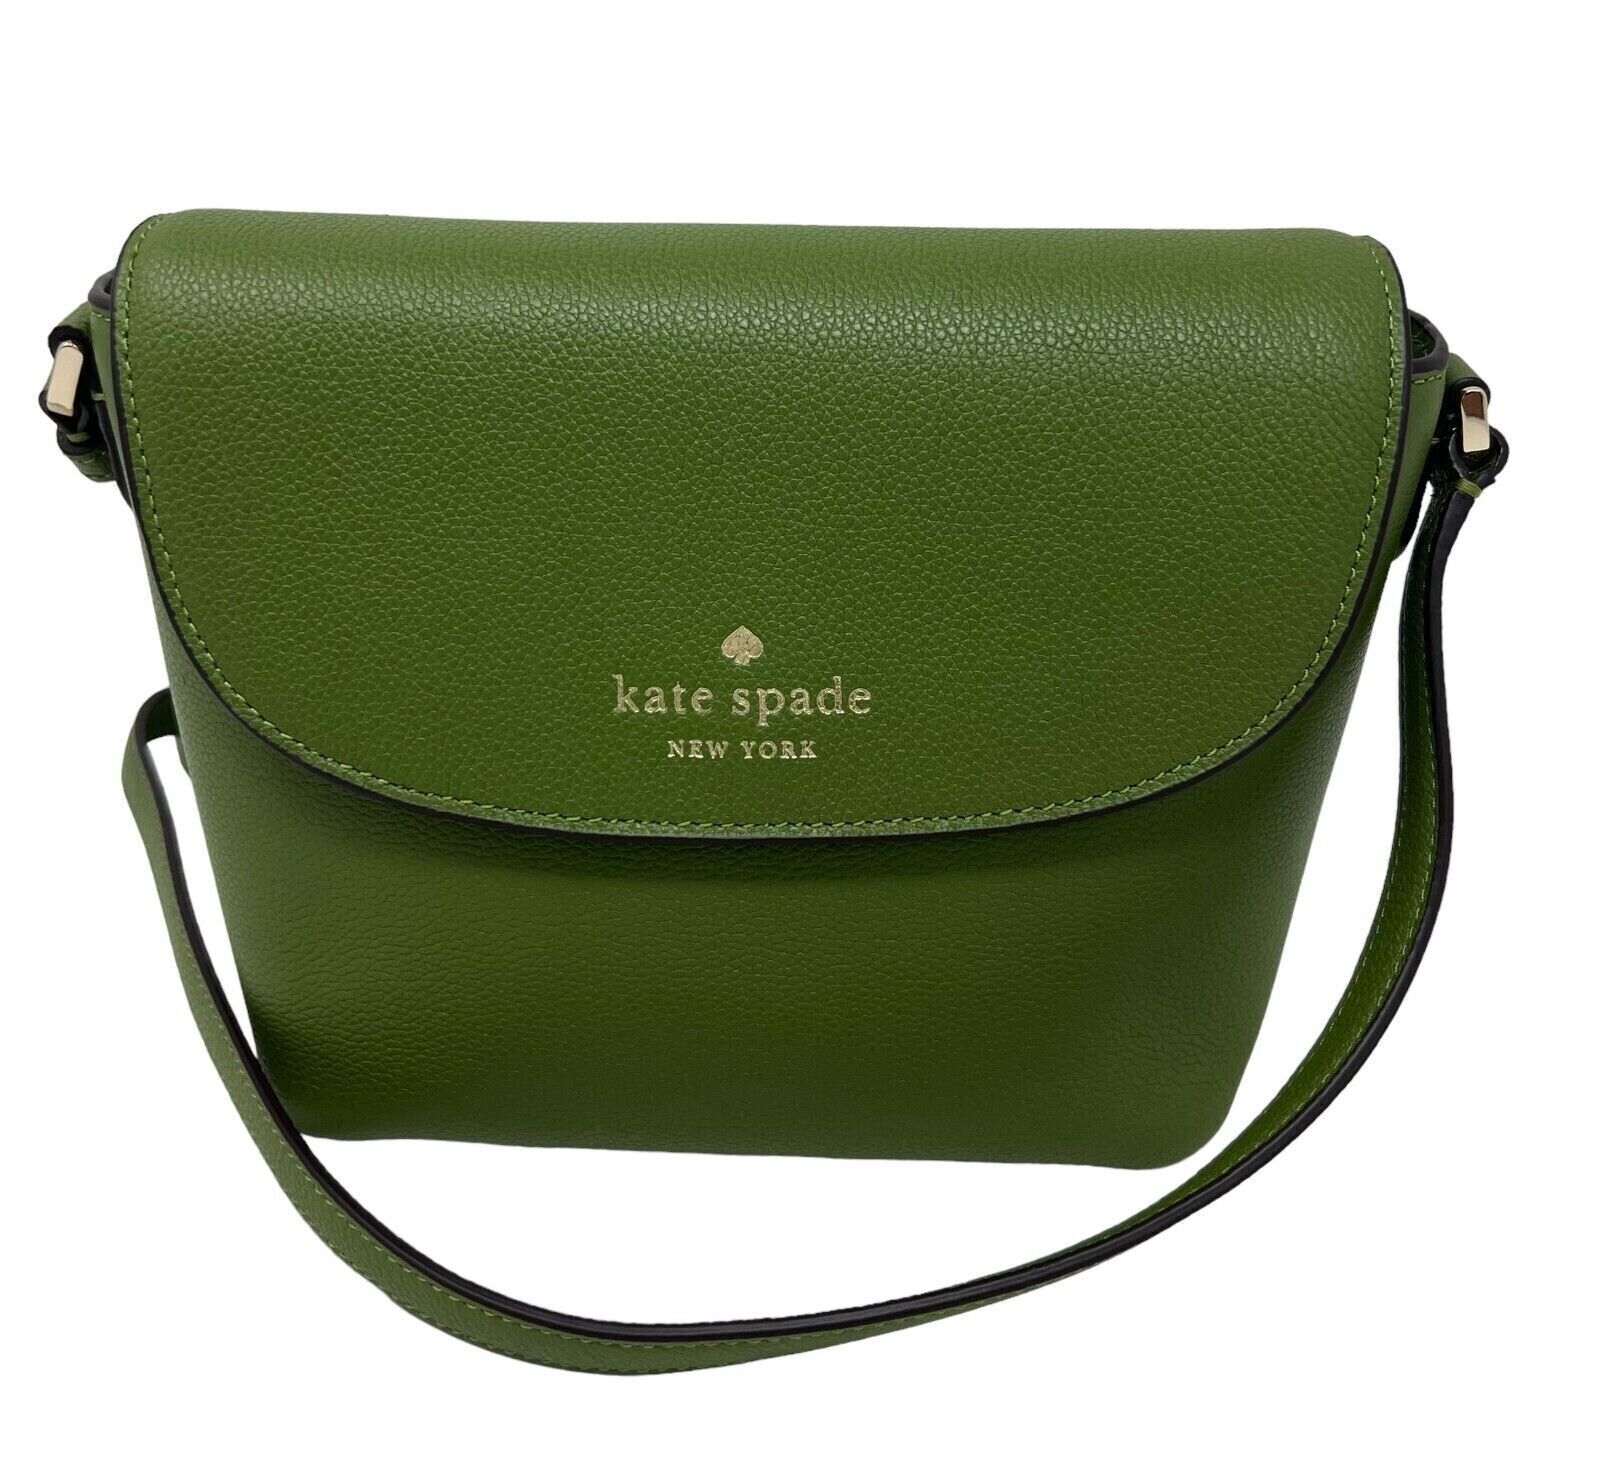 Calvin Klein Women's Signature Dome Satchel Medium Beige/green MSRP $248